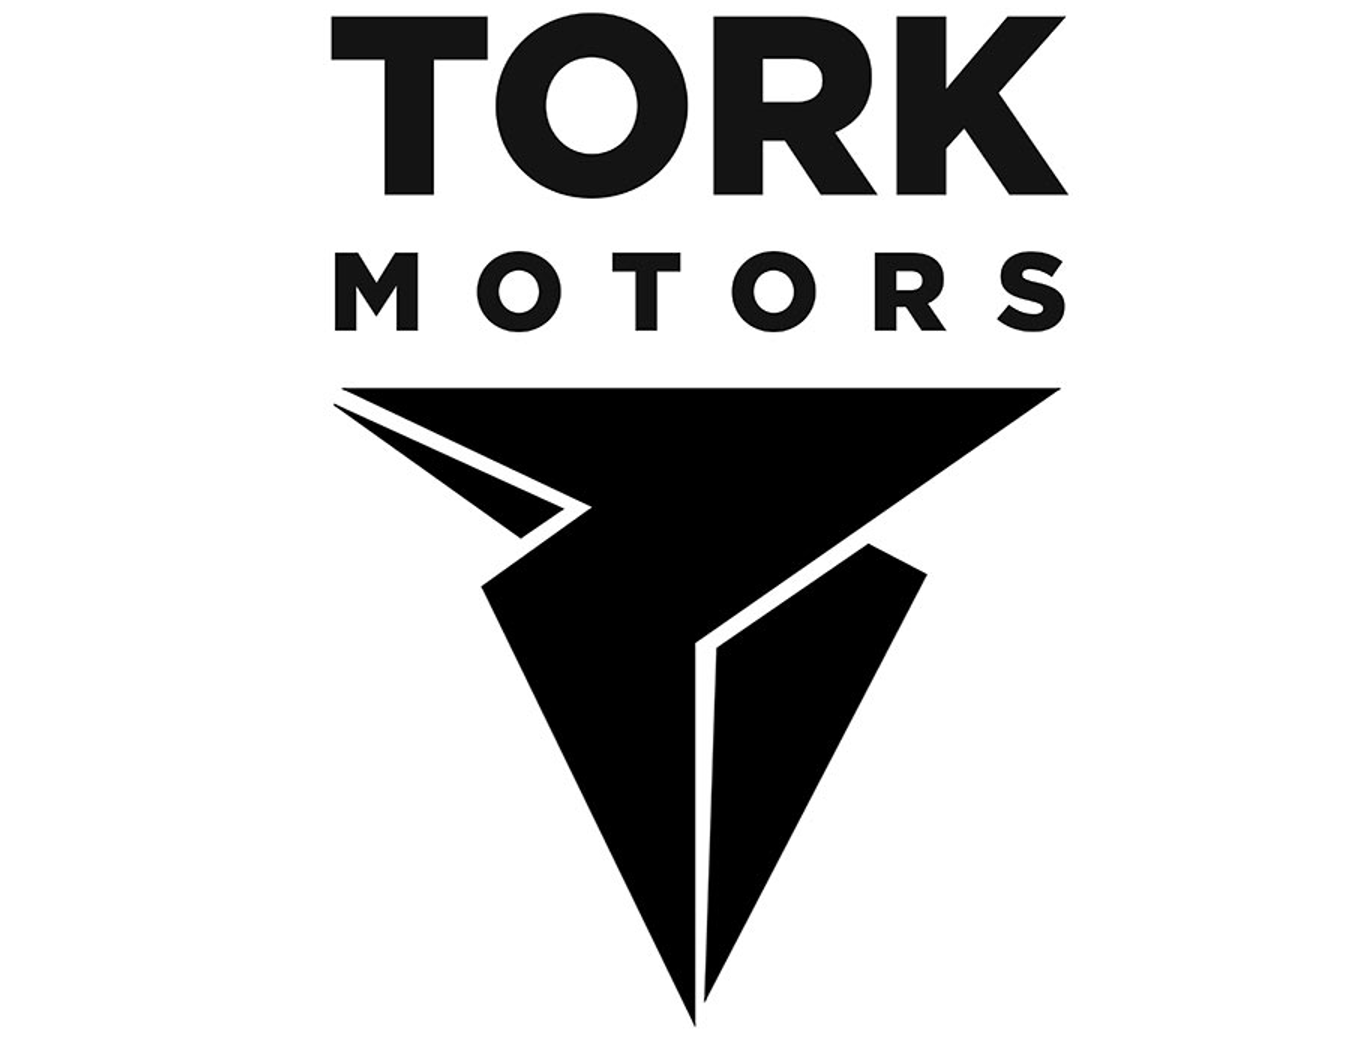  Tork Motors now supplies powertrain to 3 three-wheeler OEMs. The three-wheelers powered by Tork powertrain have clocked over a million kilometers, according to Kapil Shelke.